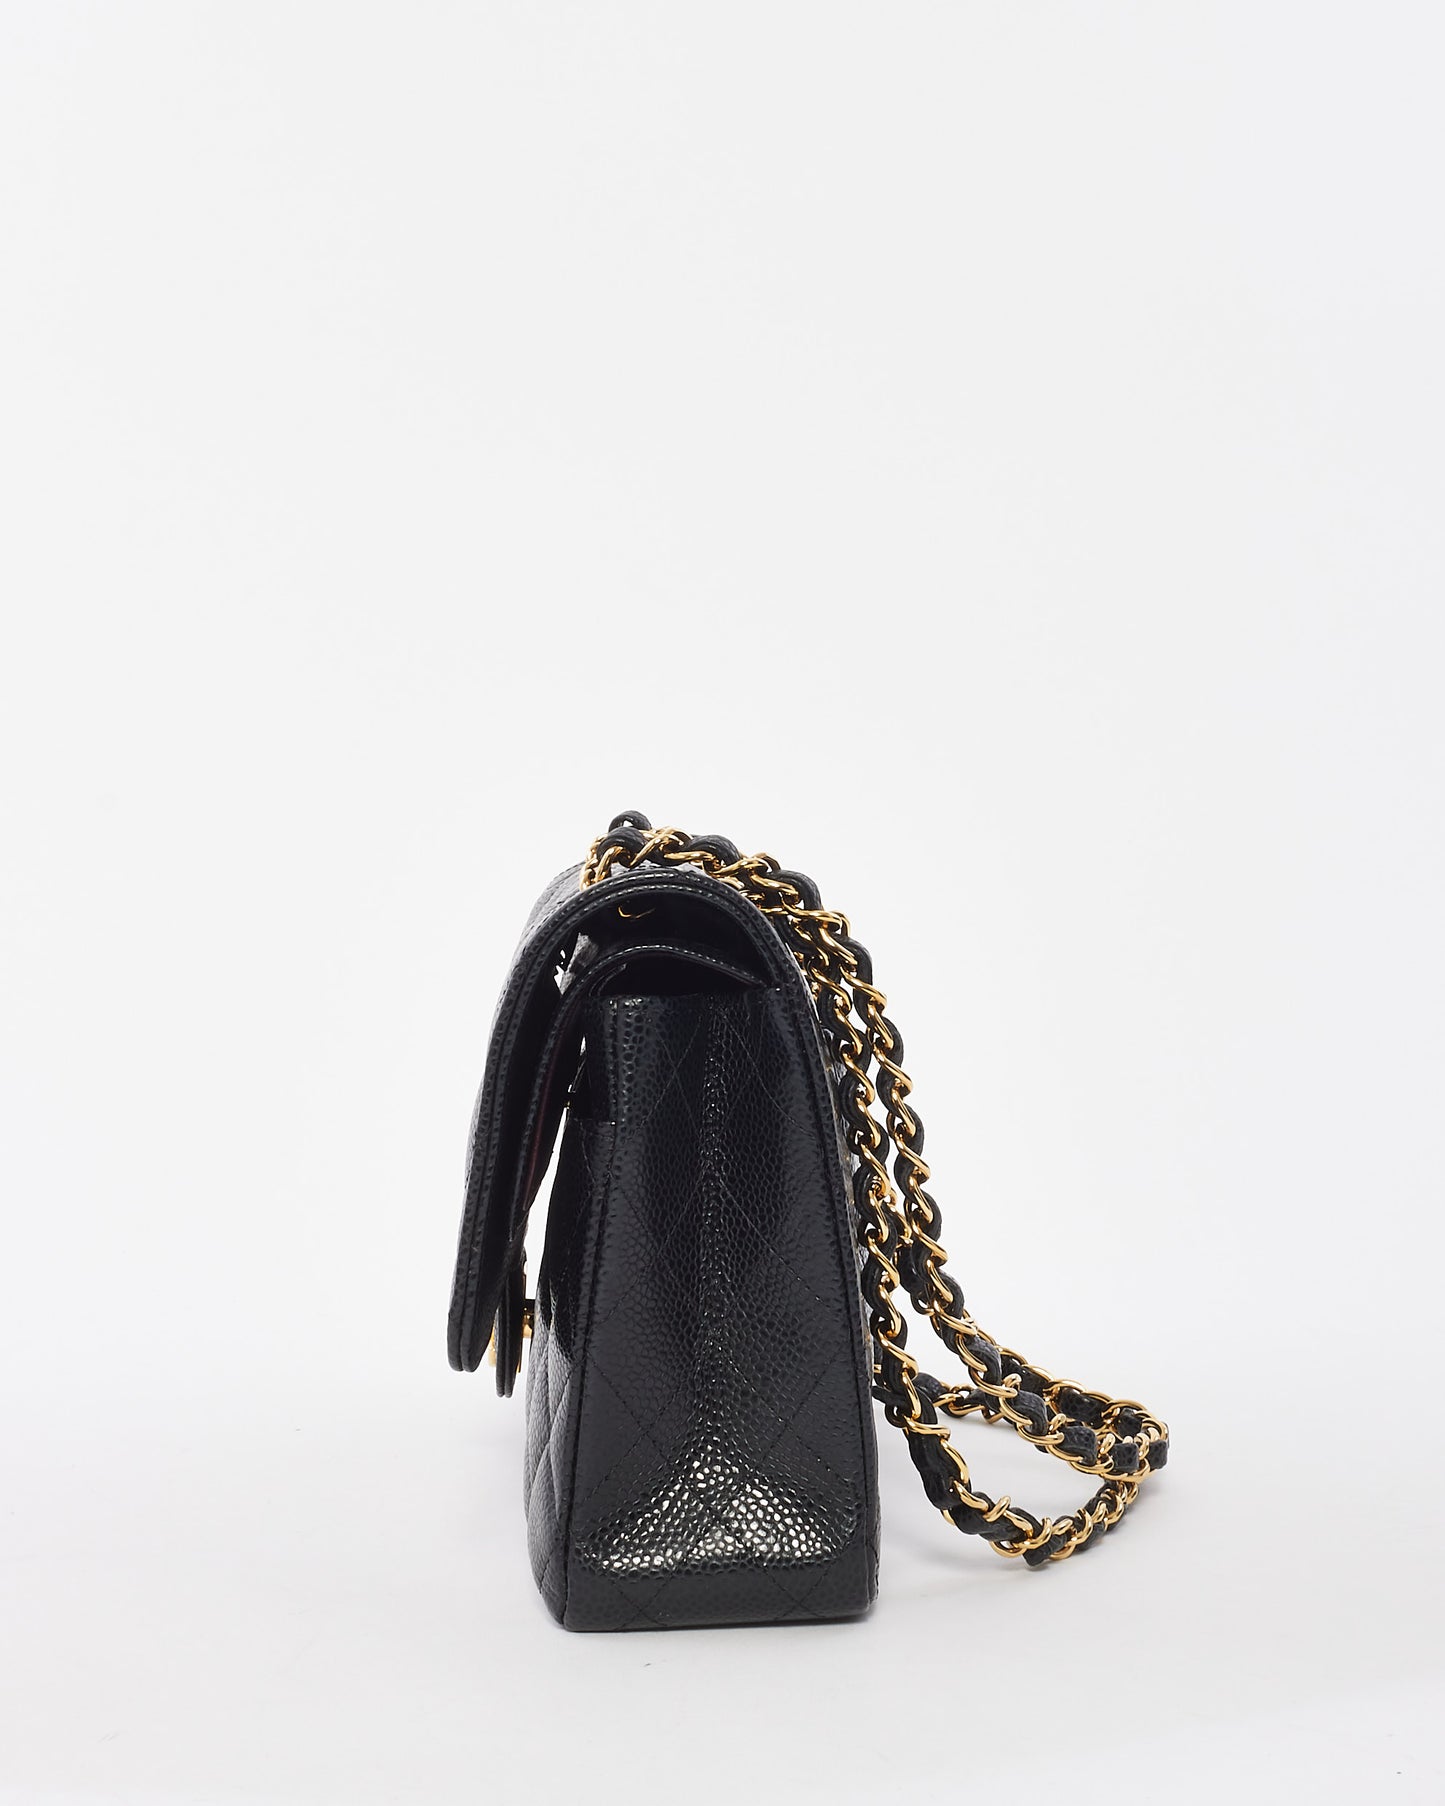 Chanel Black Caviar Leather Classic Medium Double Flap Bag GHW